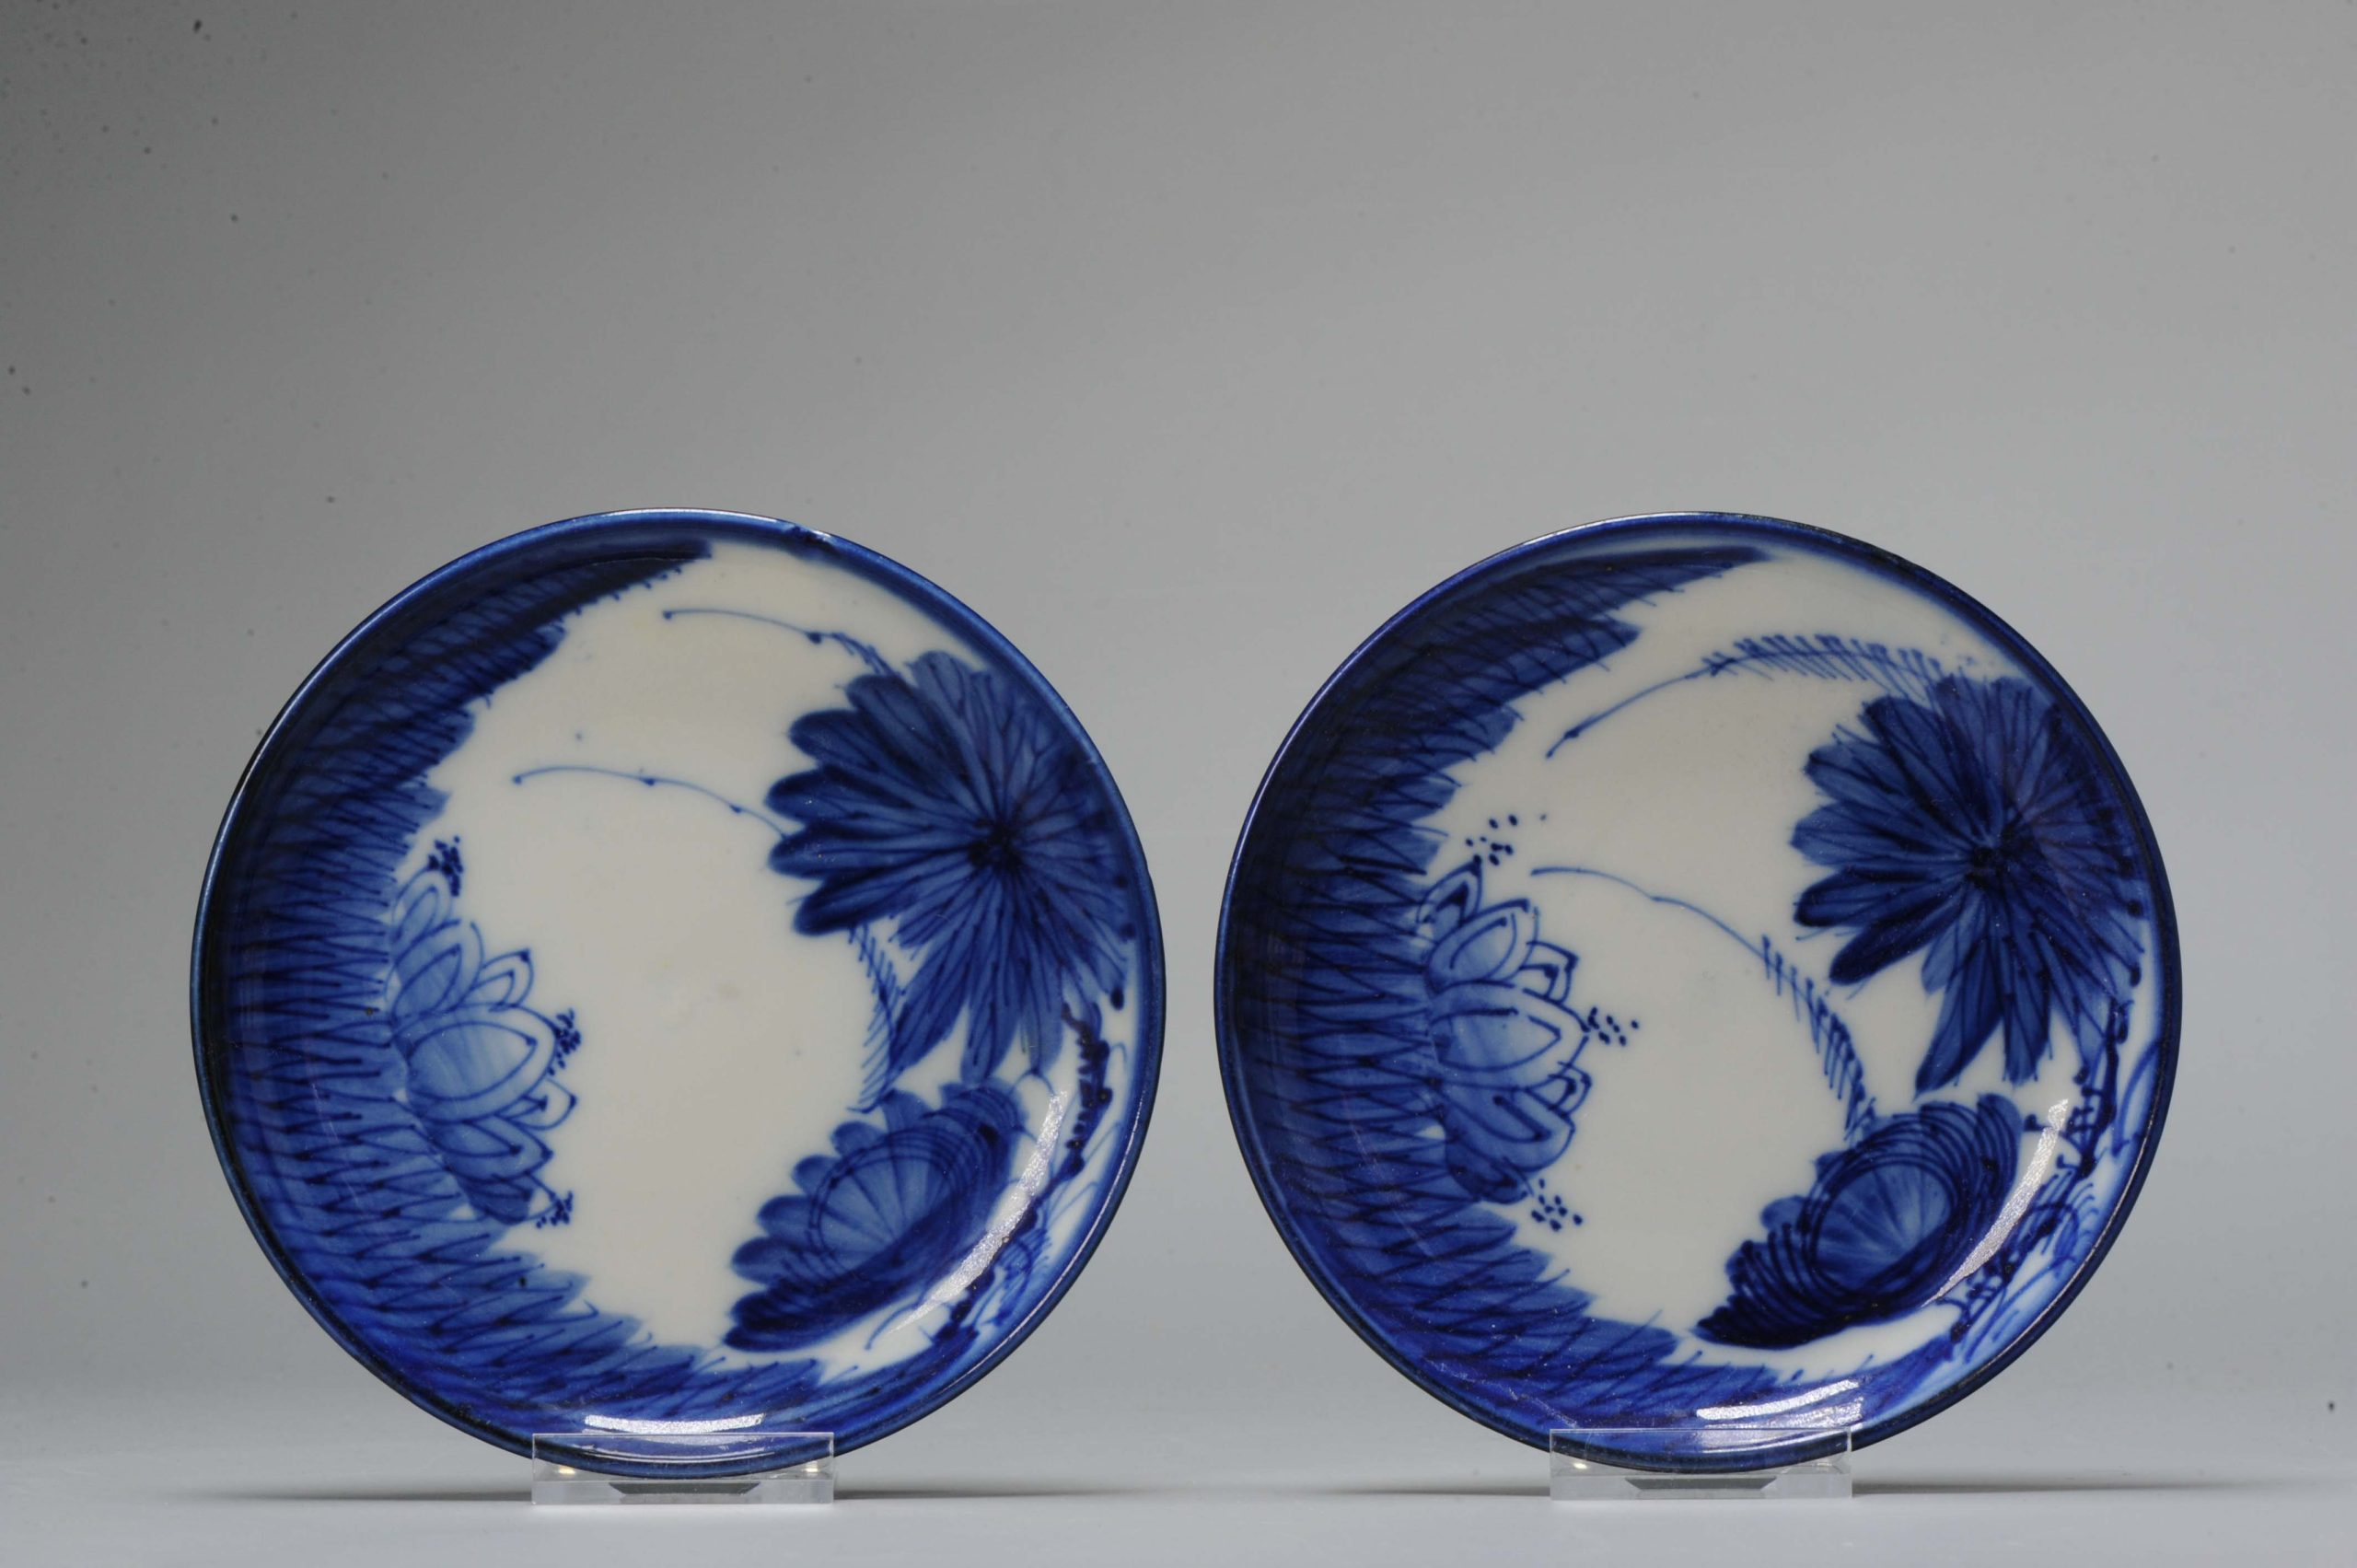 Antique Meiji period Japanese Porcelain Kaiseki set Plates with  Japan 19th/20th century